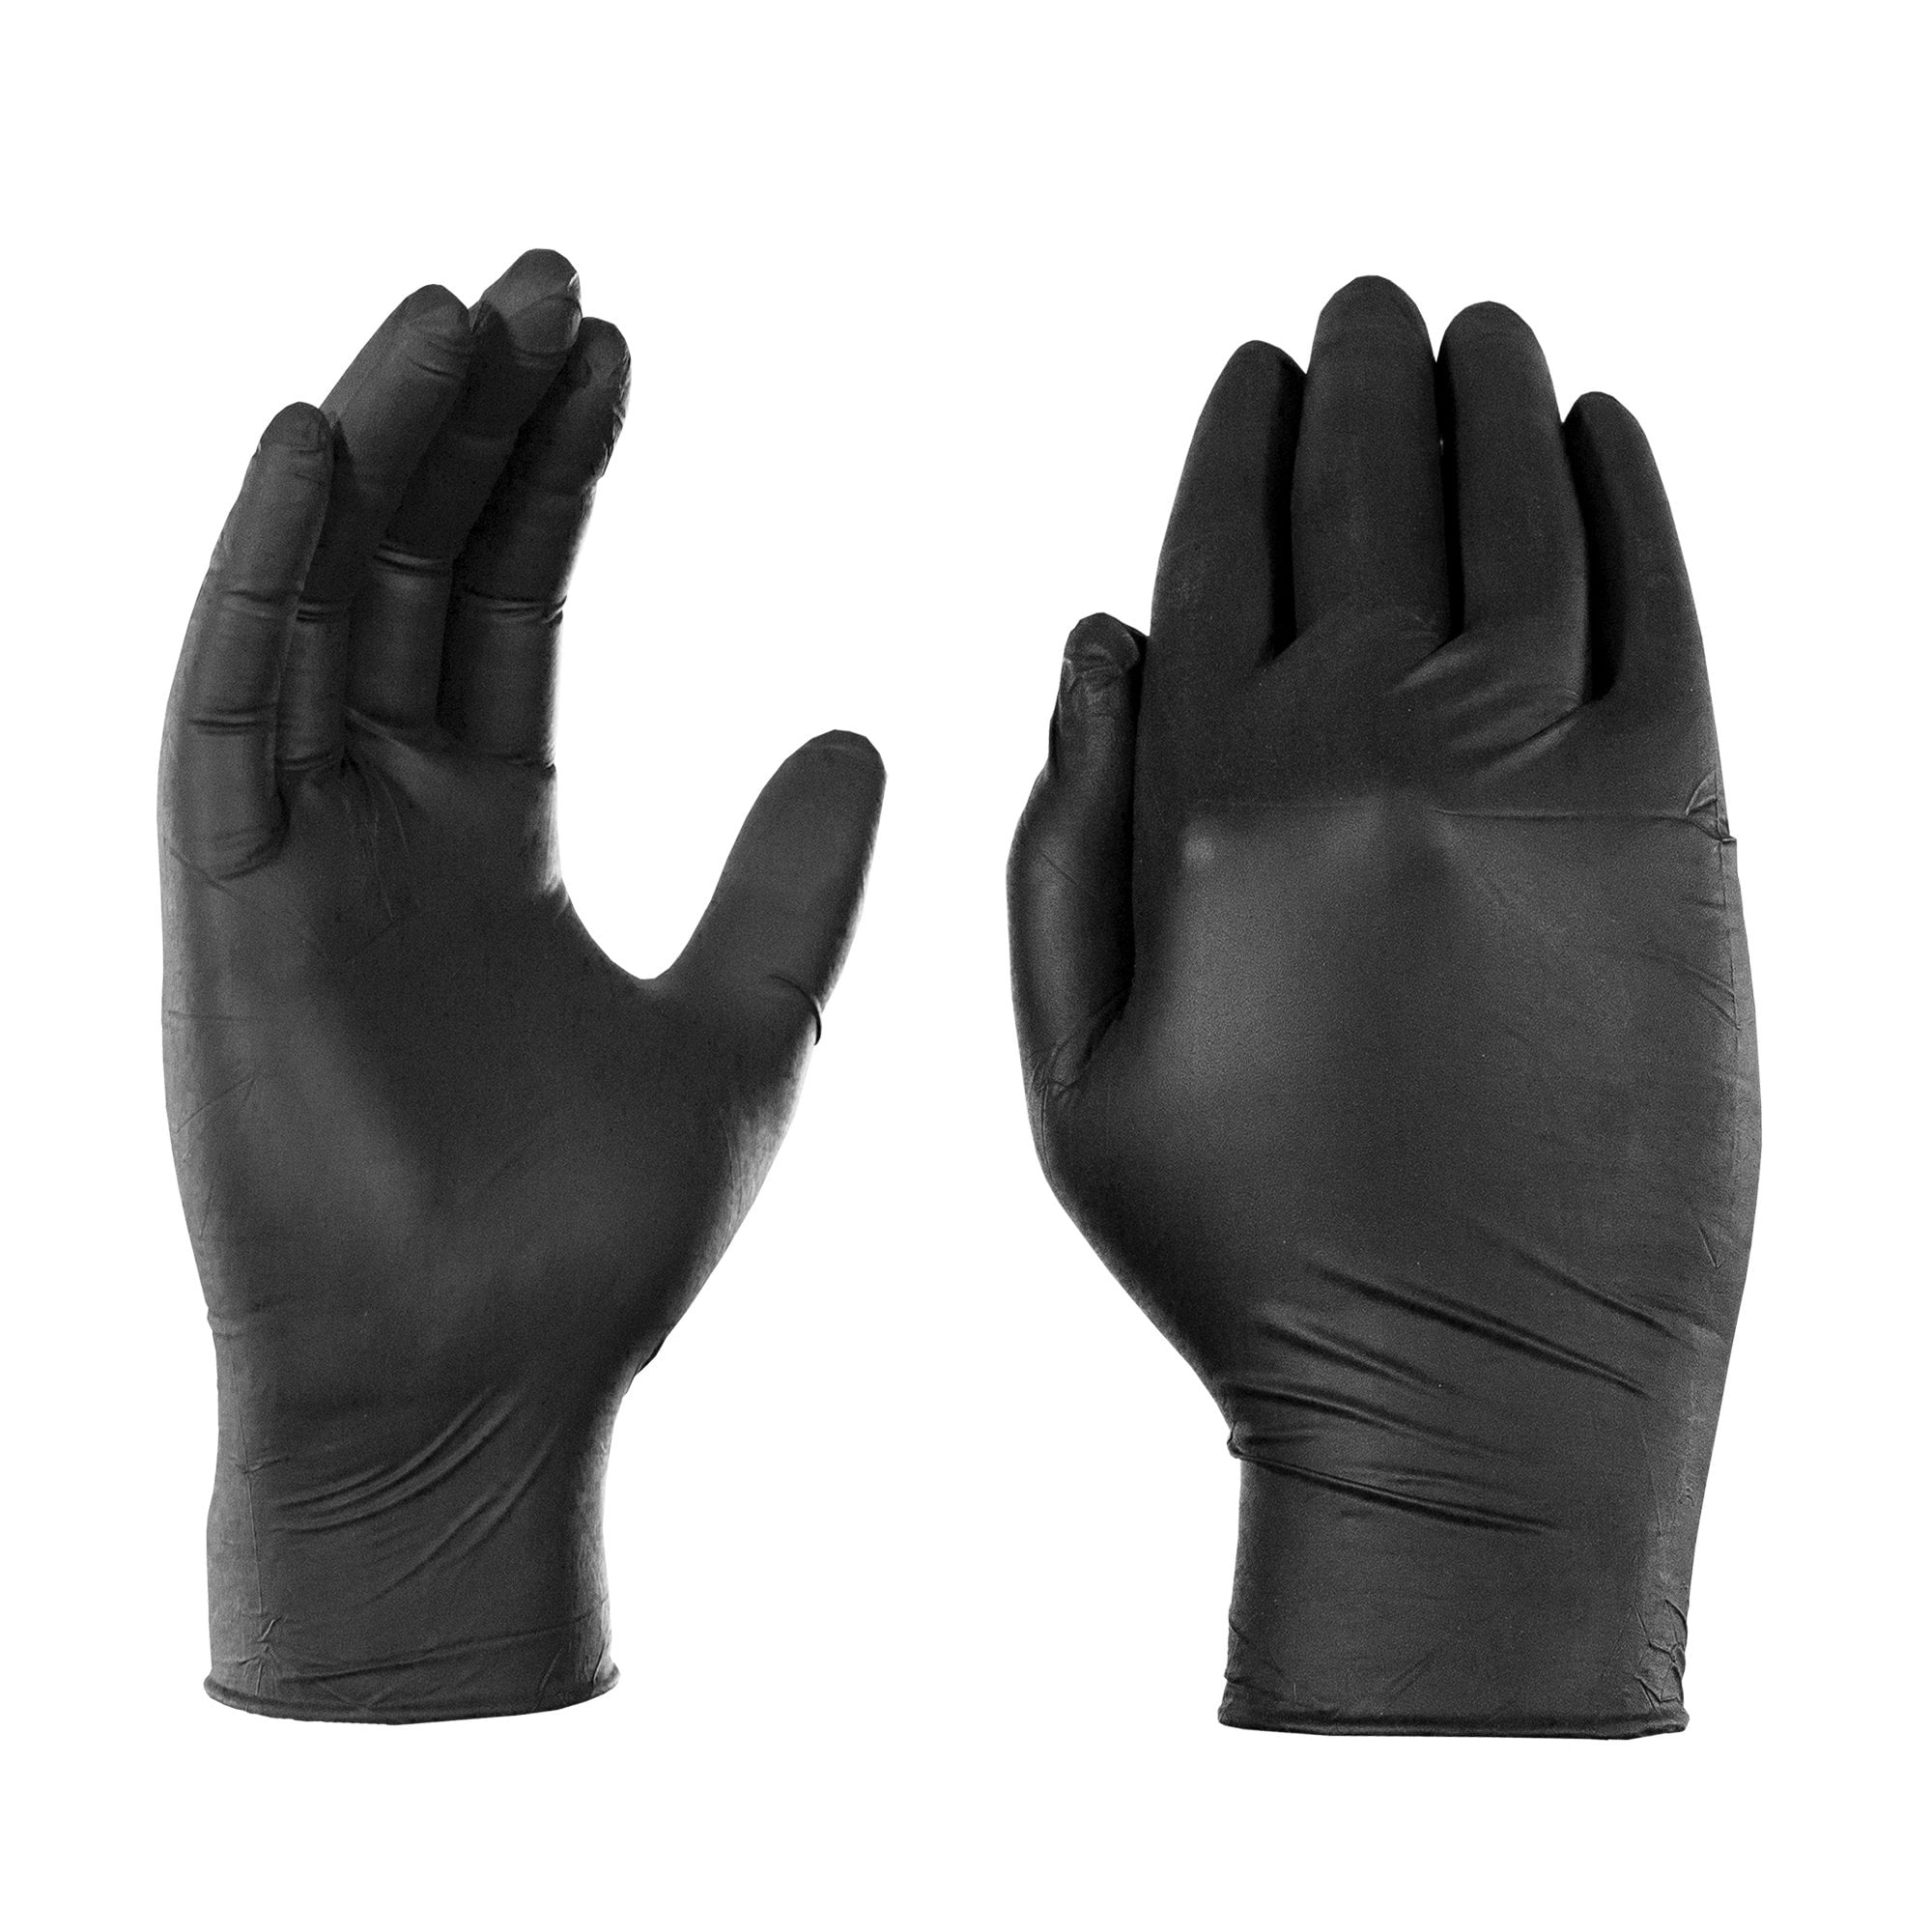 3 Mil Disposable 1EBNLBX and 1ENLBX Box of 100 1st Choice Black & Blue Nitrile Exam Gloves Textured Size Large Bundle Powder Free 